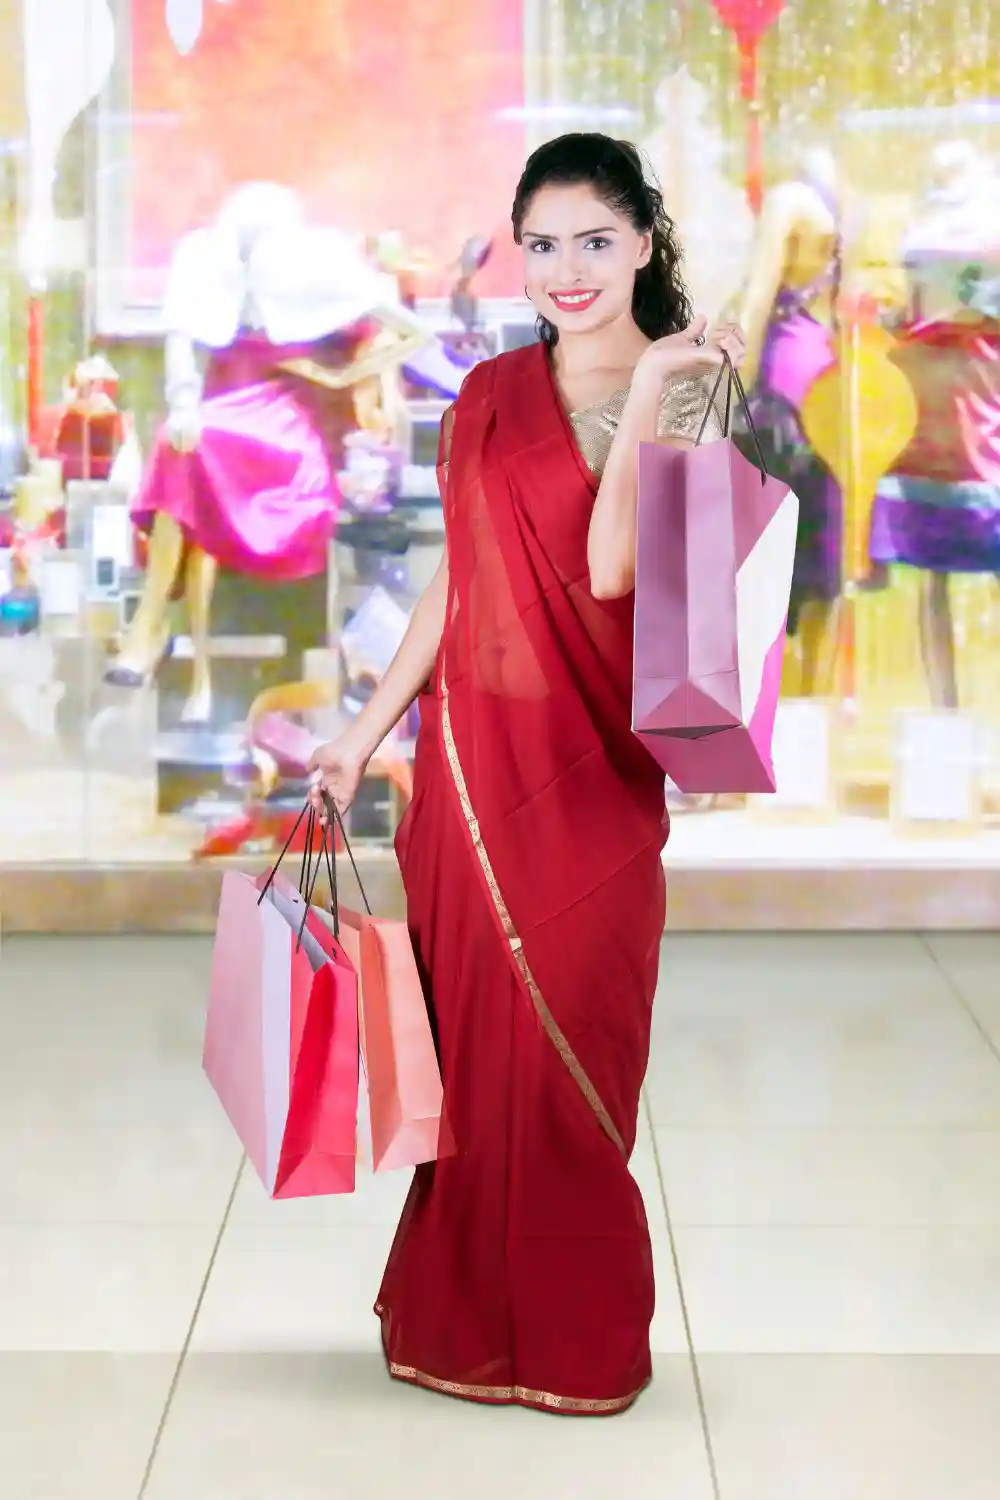 Indian Woman Shopping at Mall